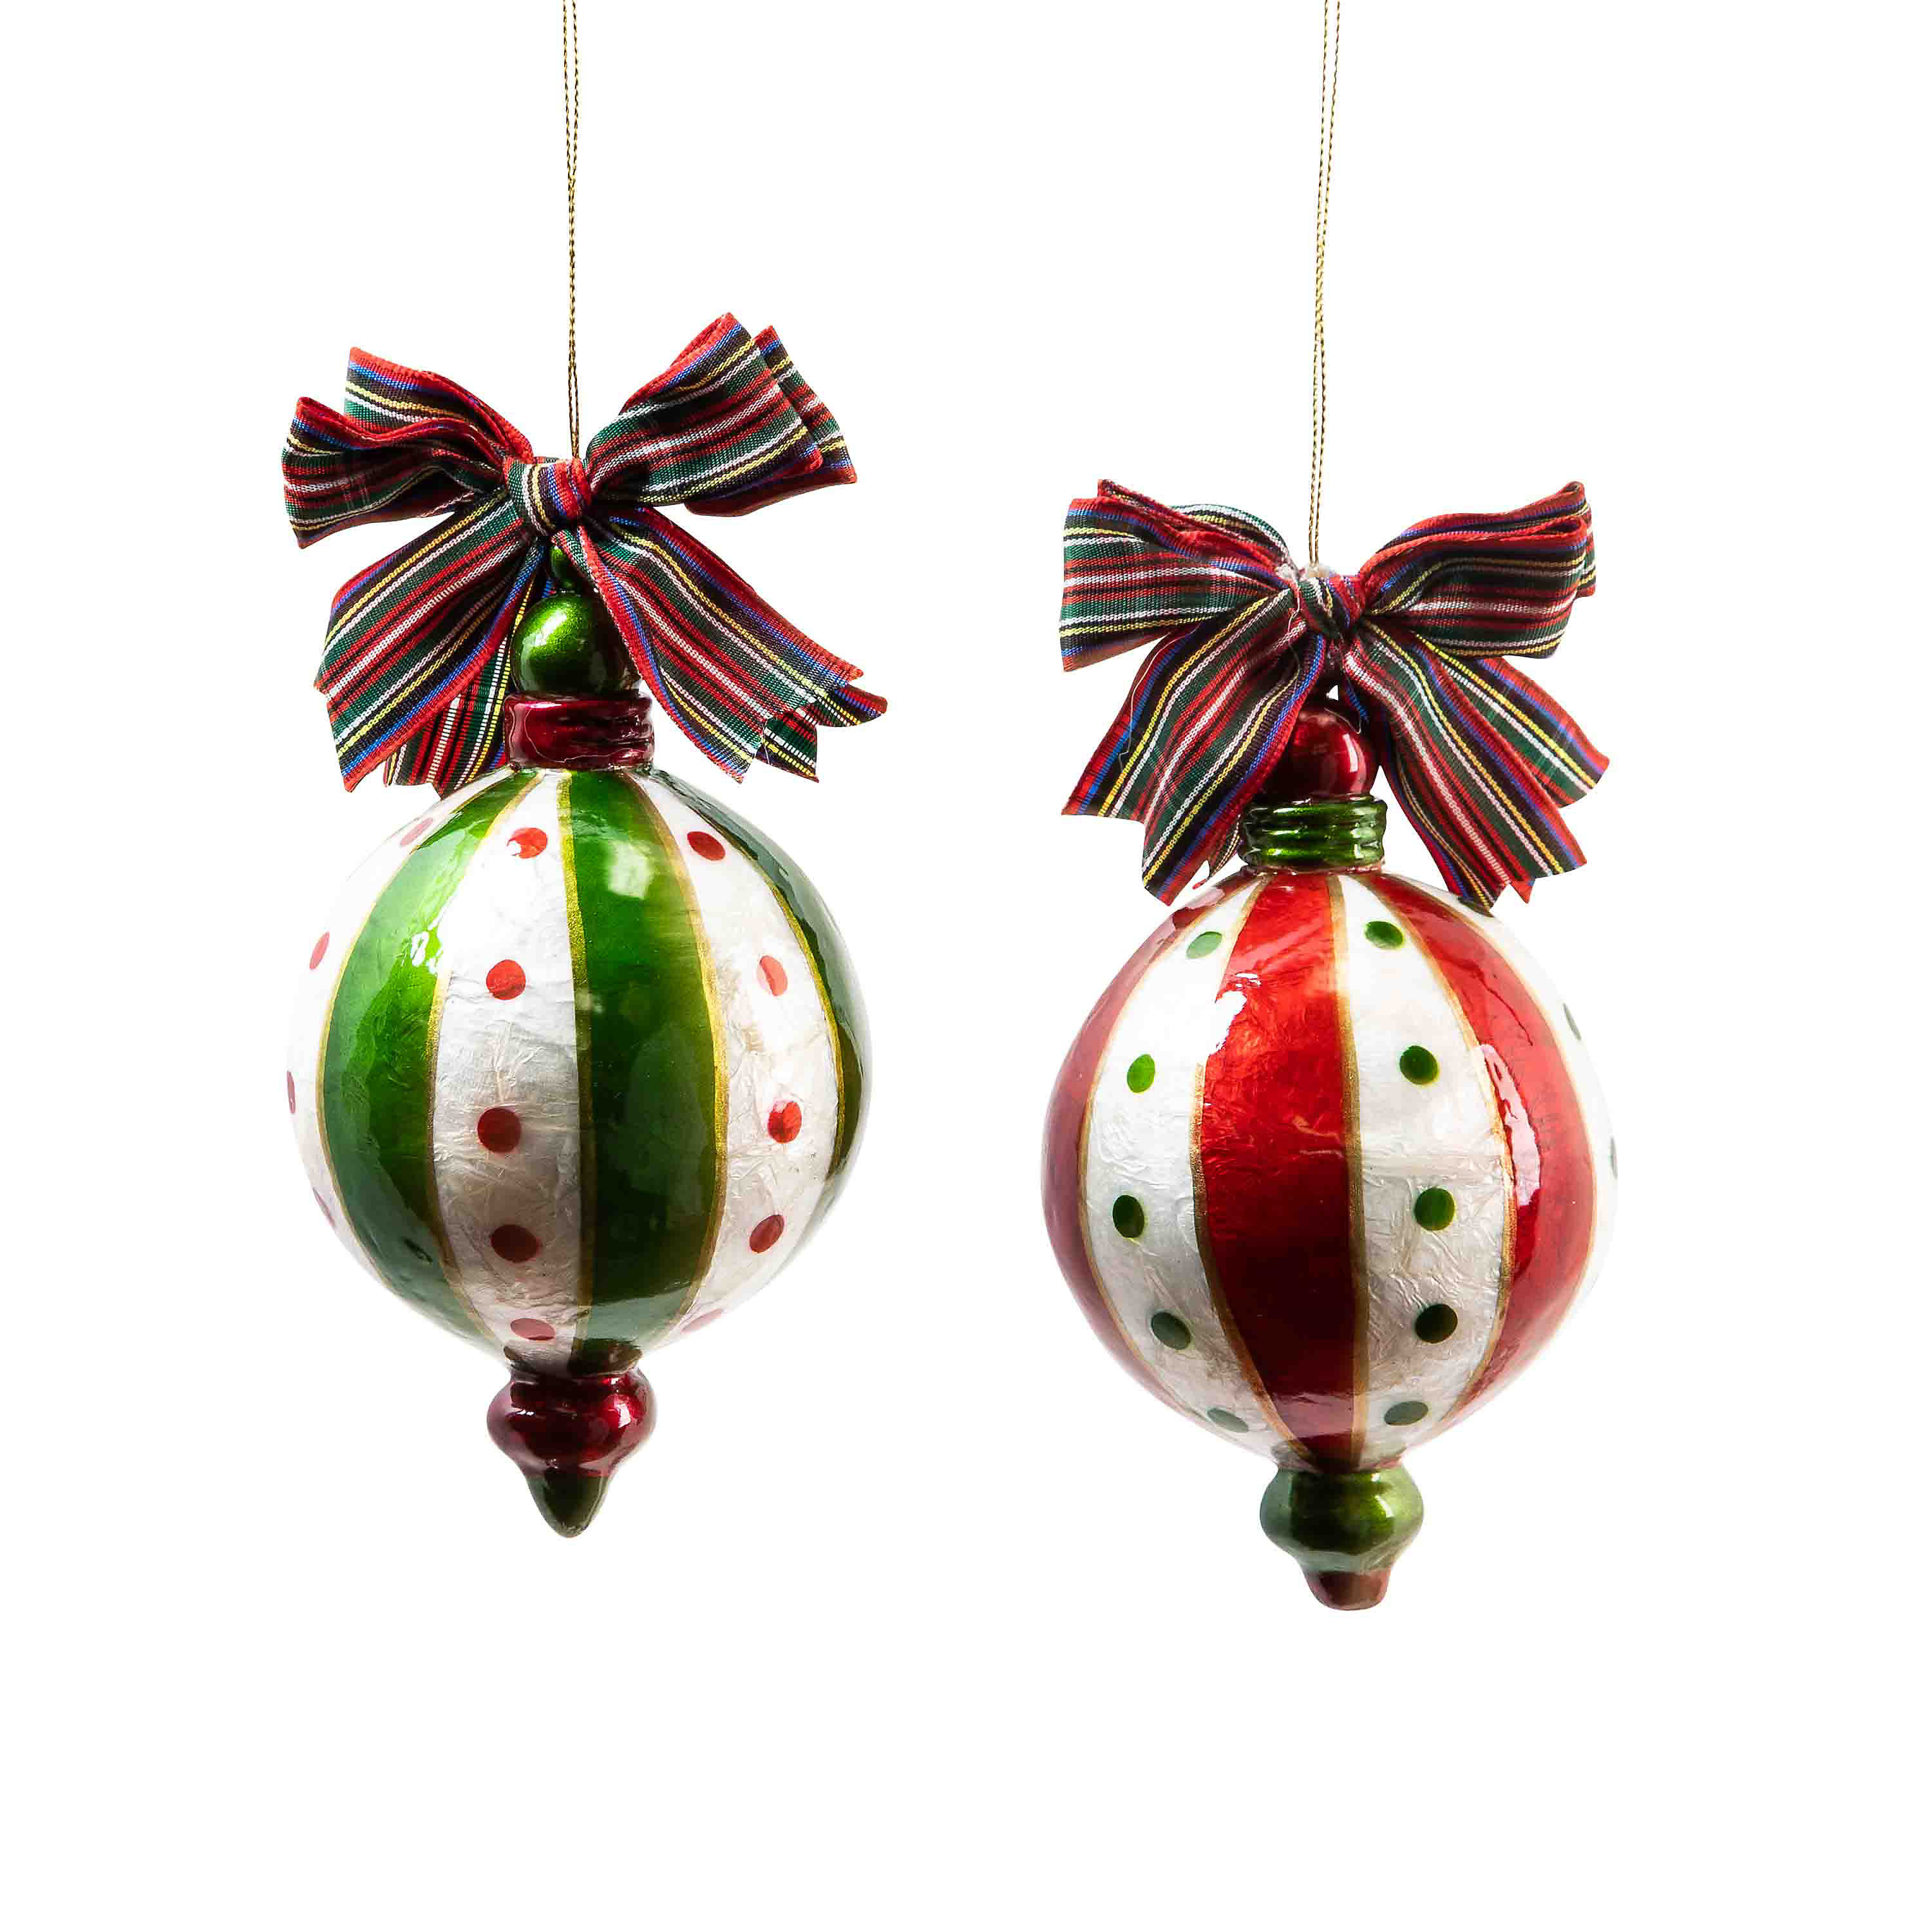 Merry Capiz Drop Ornaments - Set of 2 mackenzie-childs Panama 0